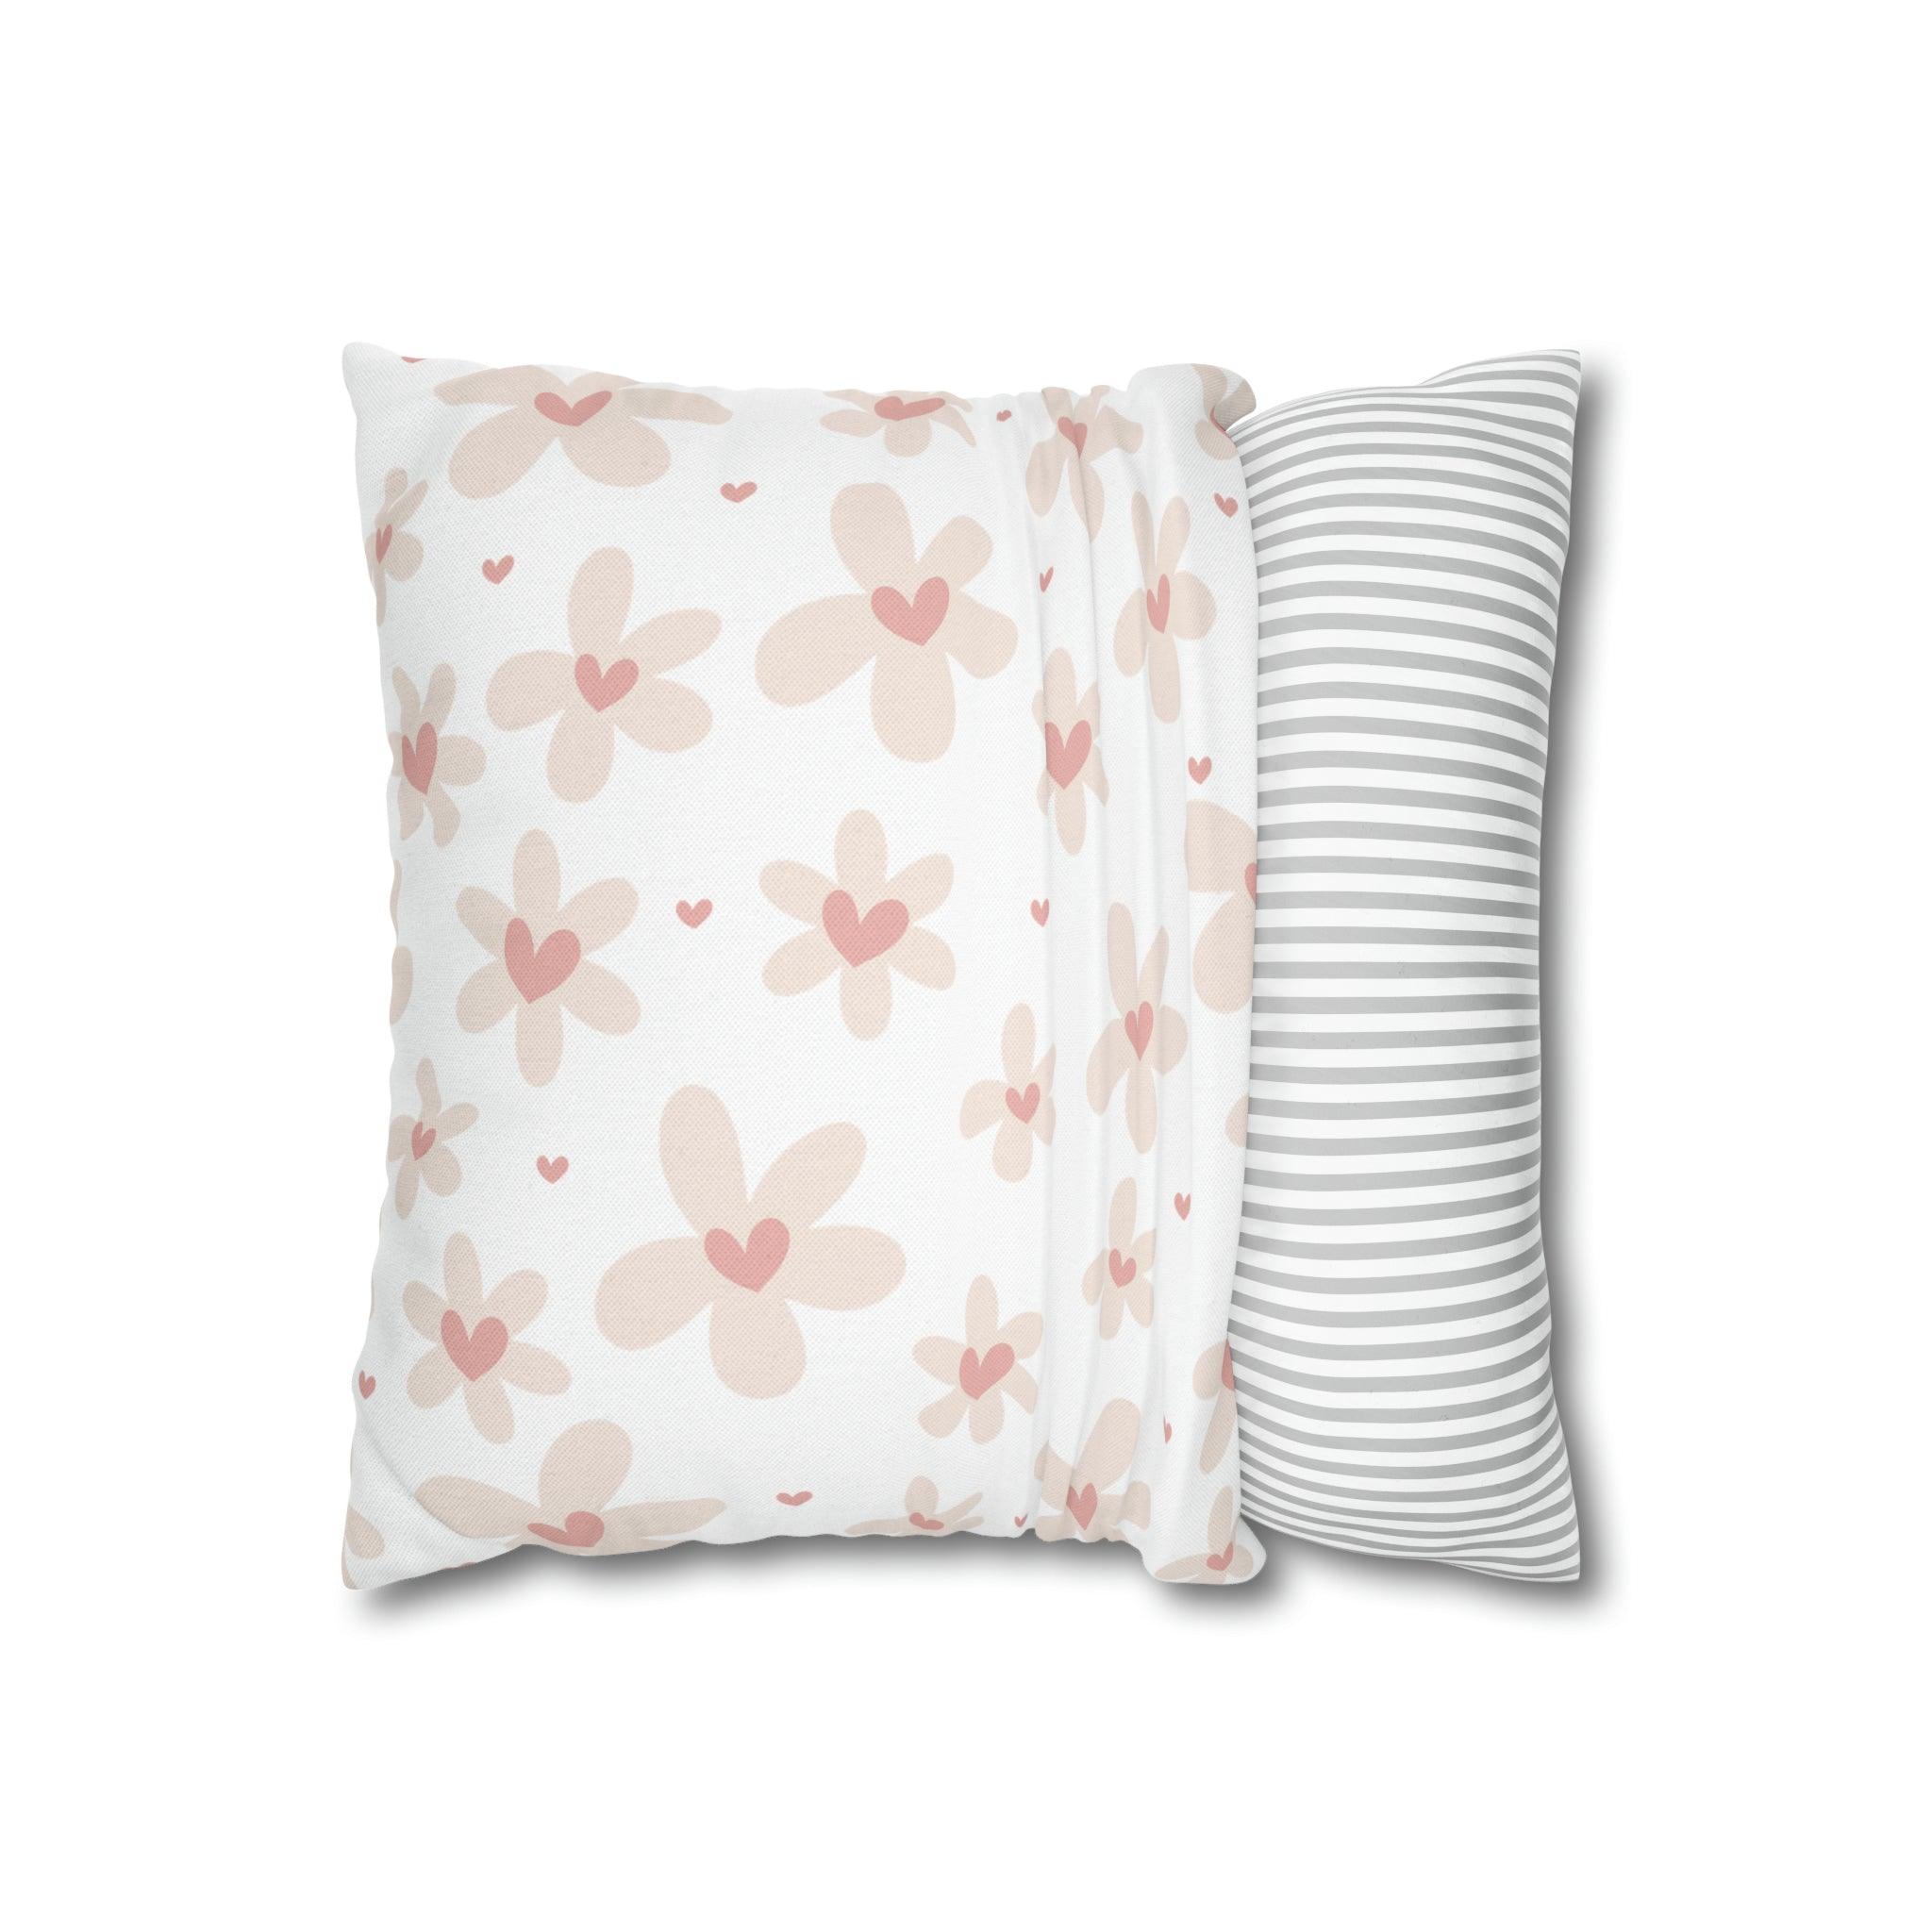 Happy Flowers - Spun Polyester Square Pillow Case - Soulshinecreators